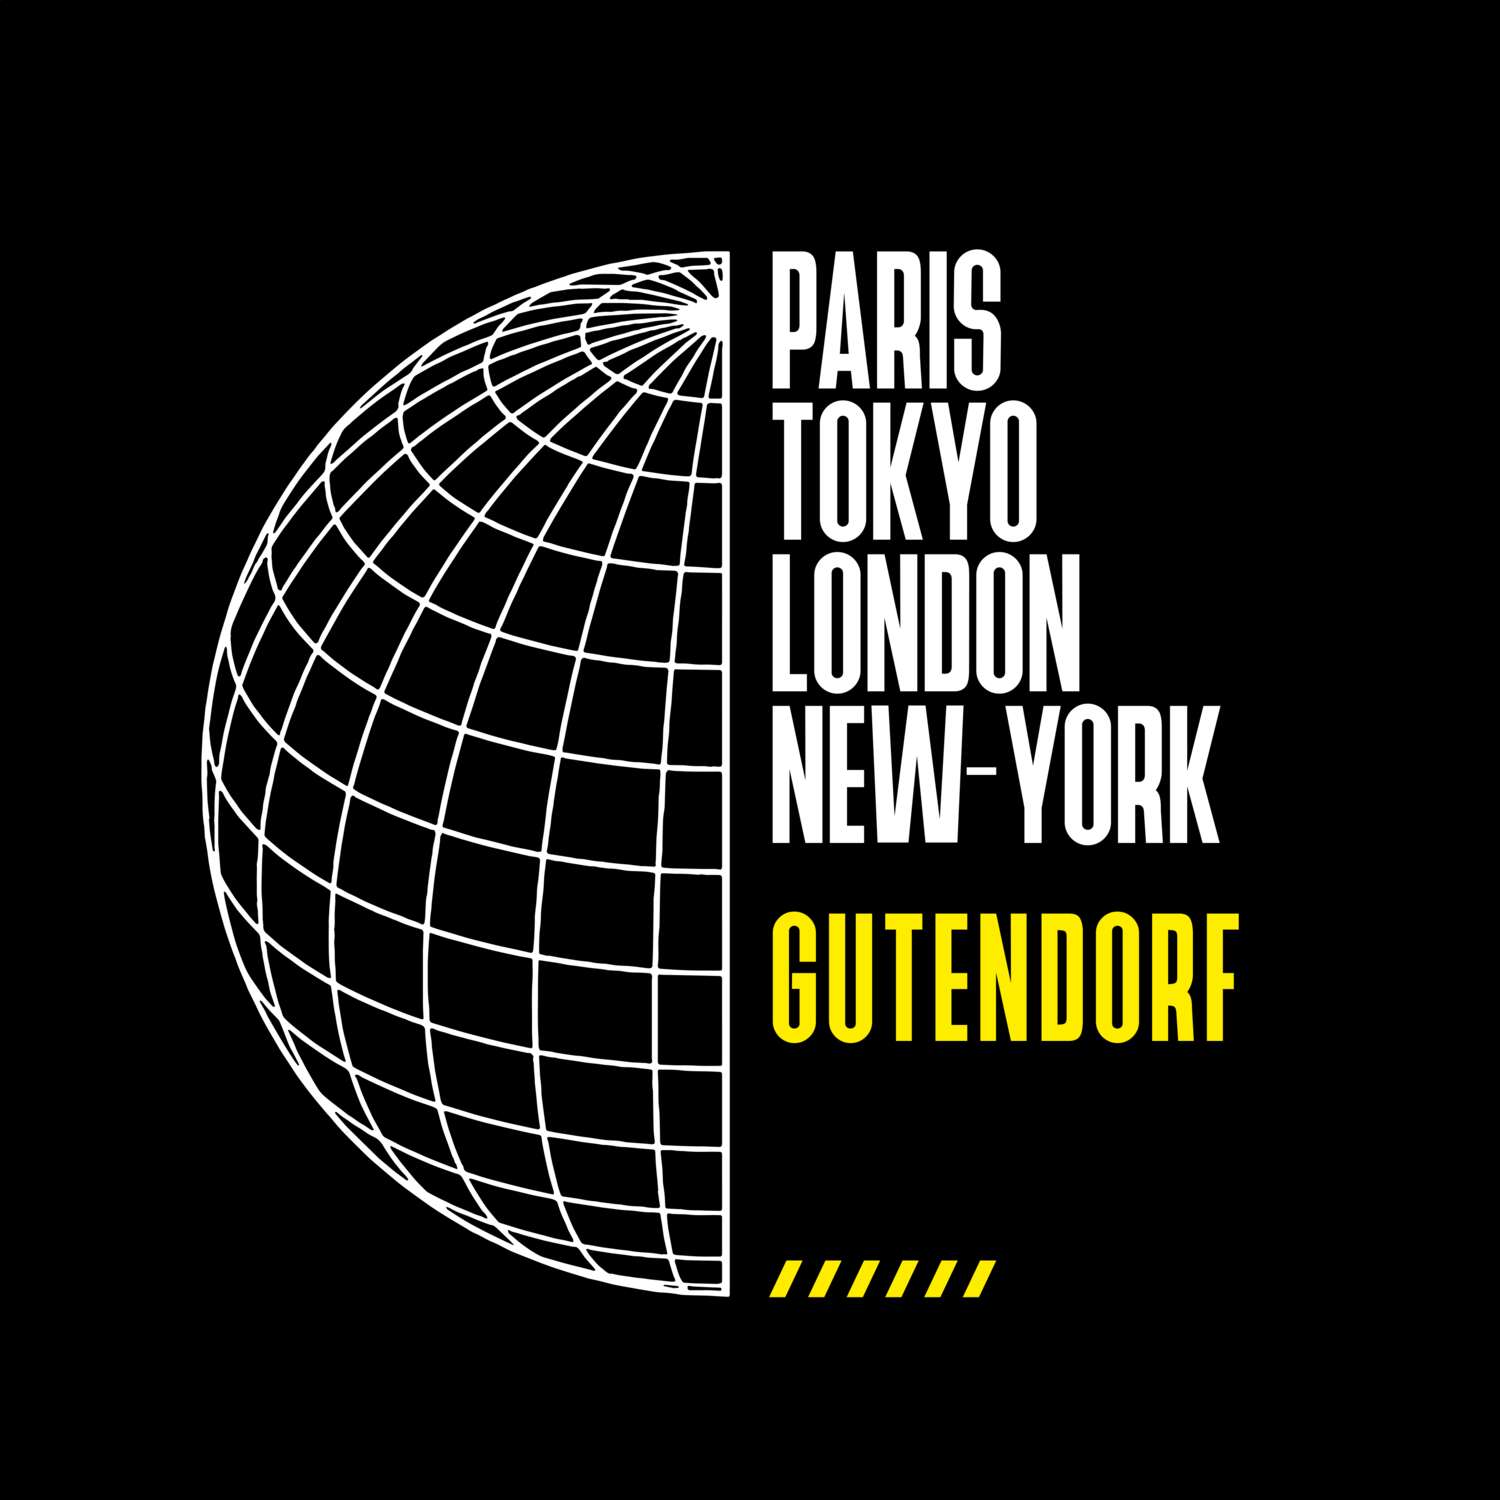 Gutendorf T-Shirt »Paris Tokyo London«